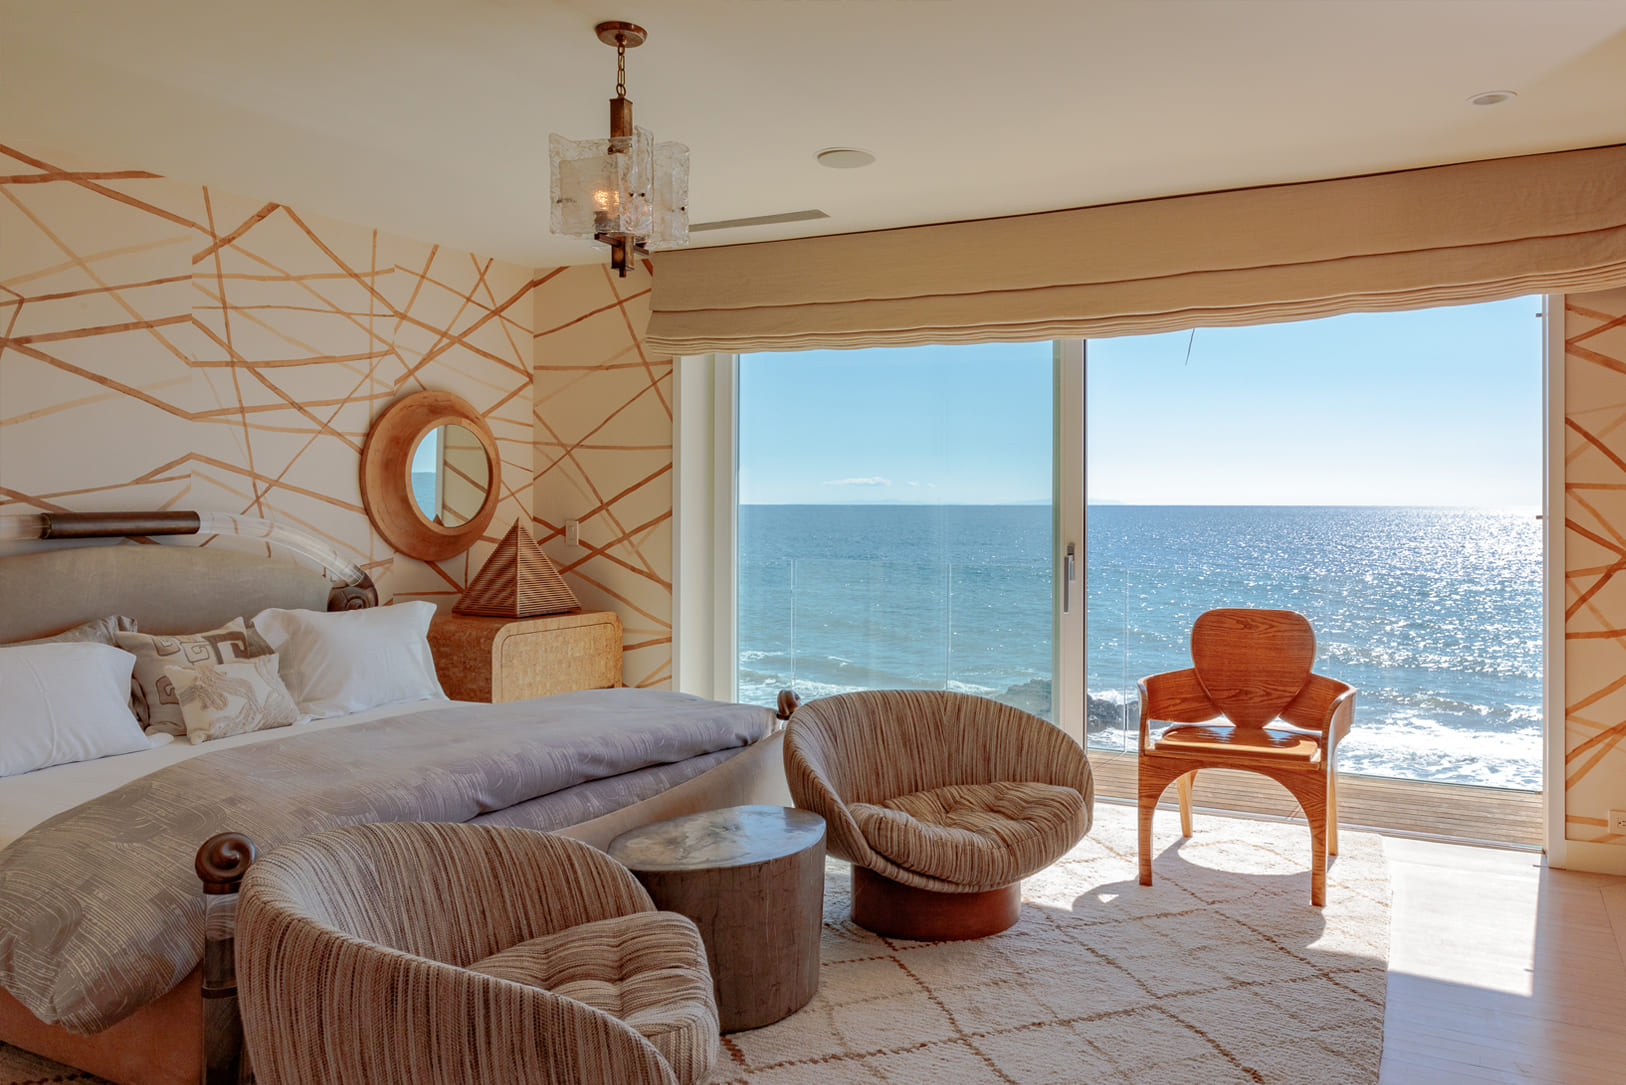 Ocean front bedroom with kelly wearstler custom decor